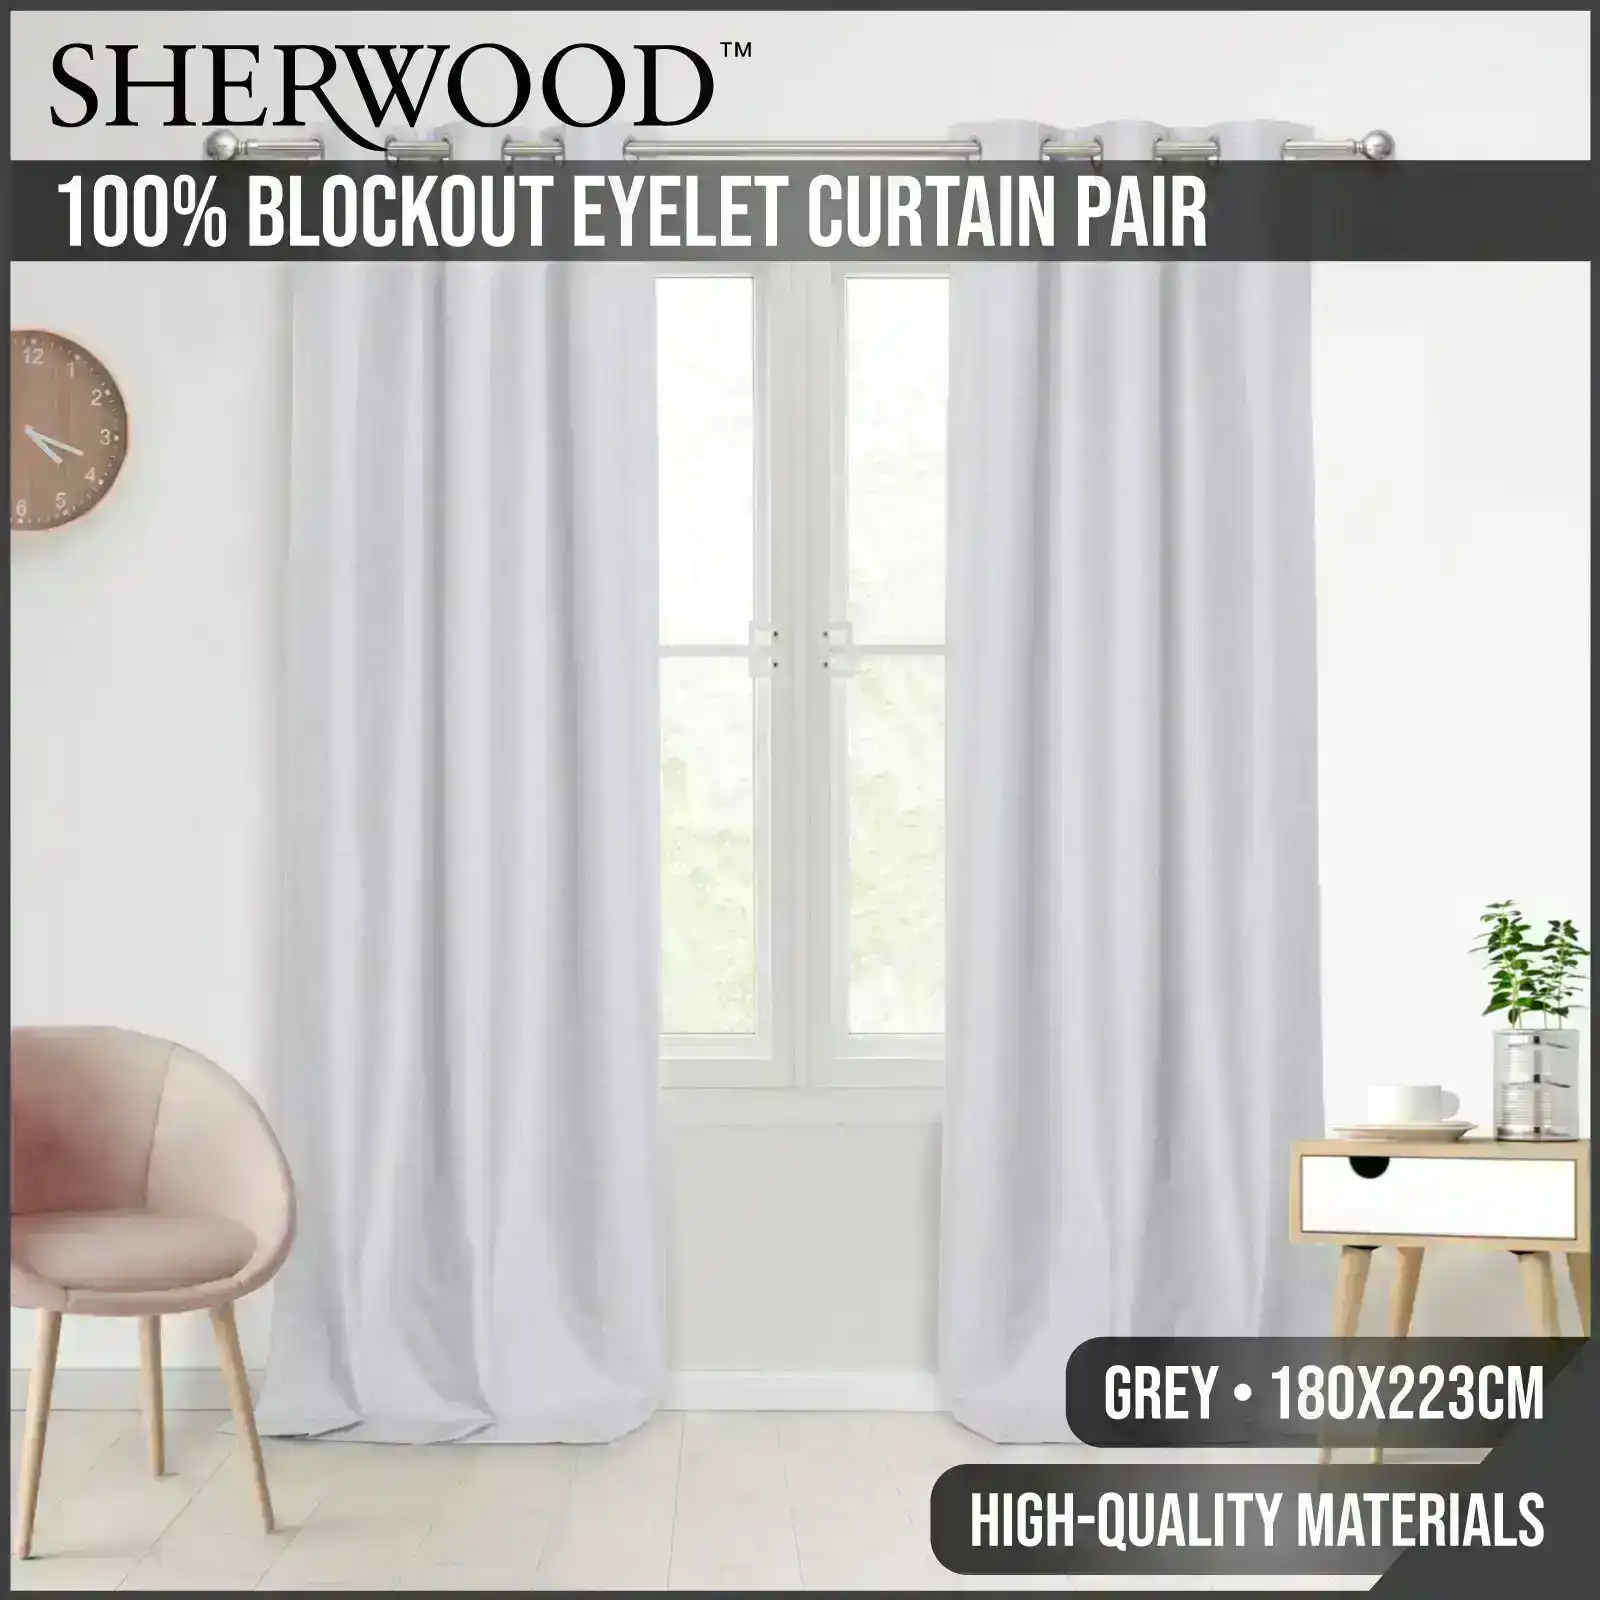 Sherwood Home 100% Blockout Eyelet Curtain Pair Grey 180x223cm